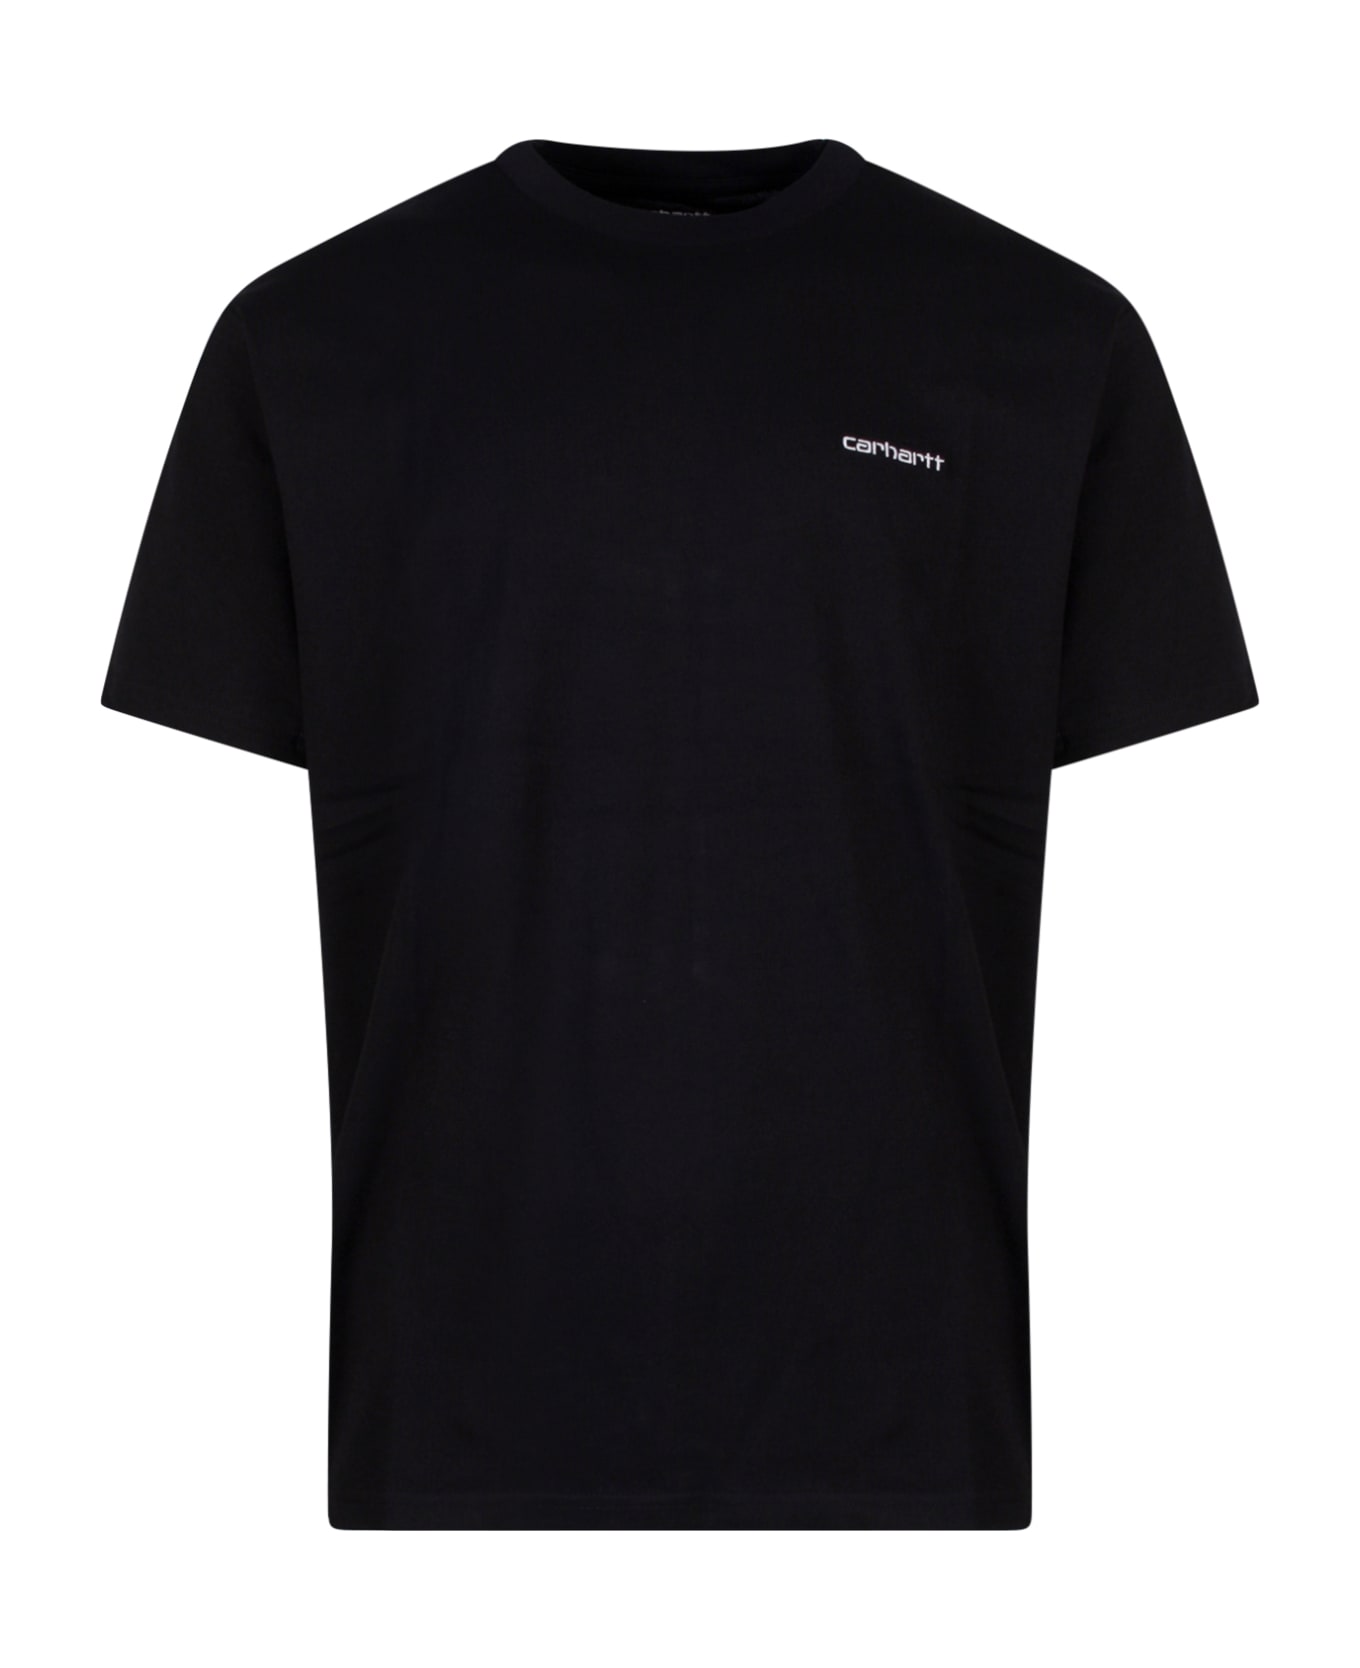 Carhartt T-shirt - Xx Black White